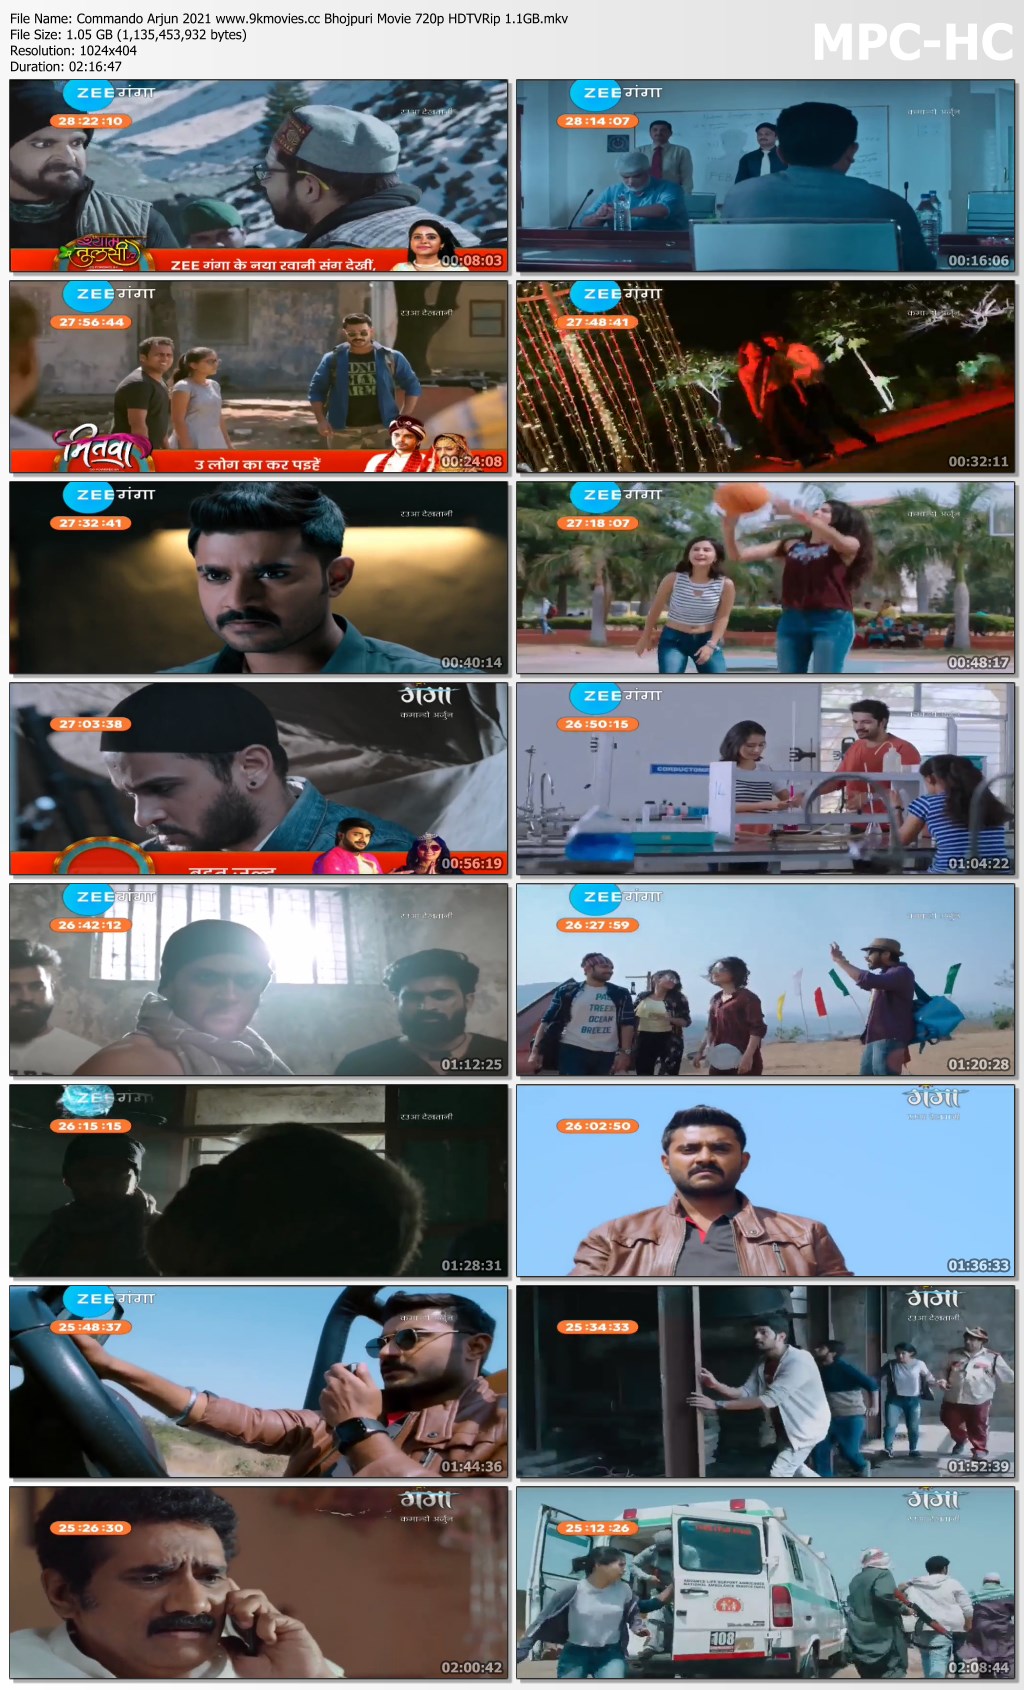 Commando Arjun 2021 www.9kmovies.cc Bhojpuri Movie 720p HDTVRip 1.1GB.mkv thumbs1dcf0d9a2ec8a5bc